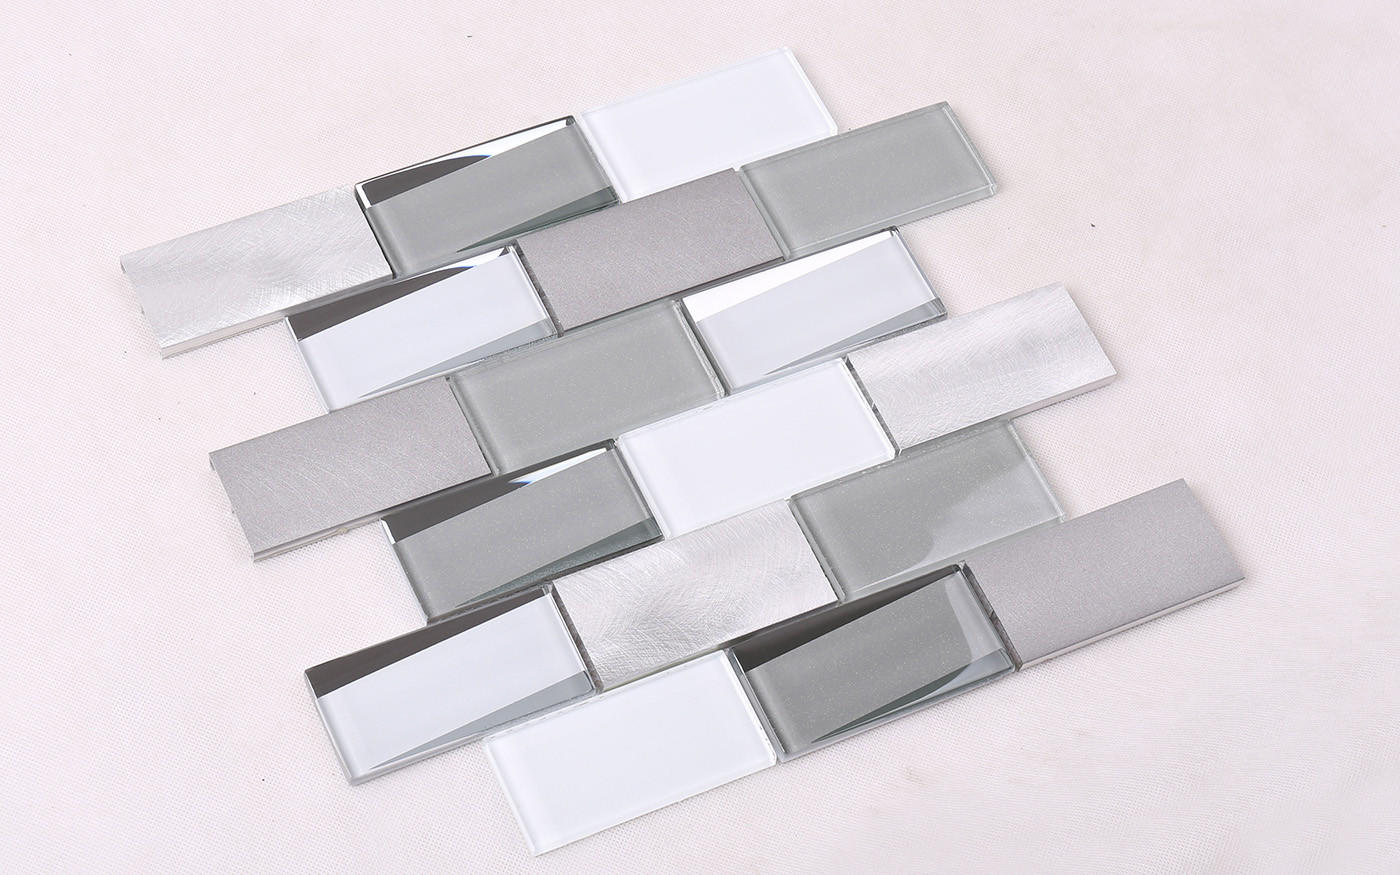 3x3 glass metal mosaic tile design for bathroom